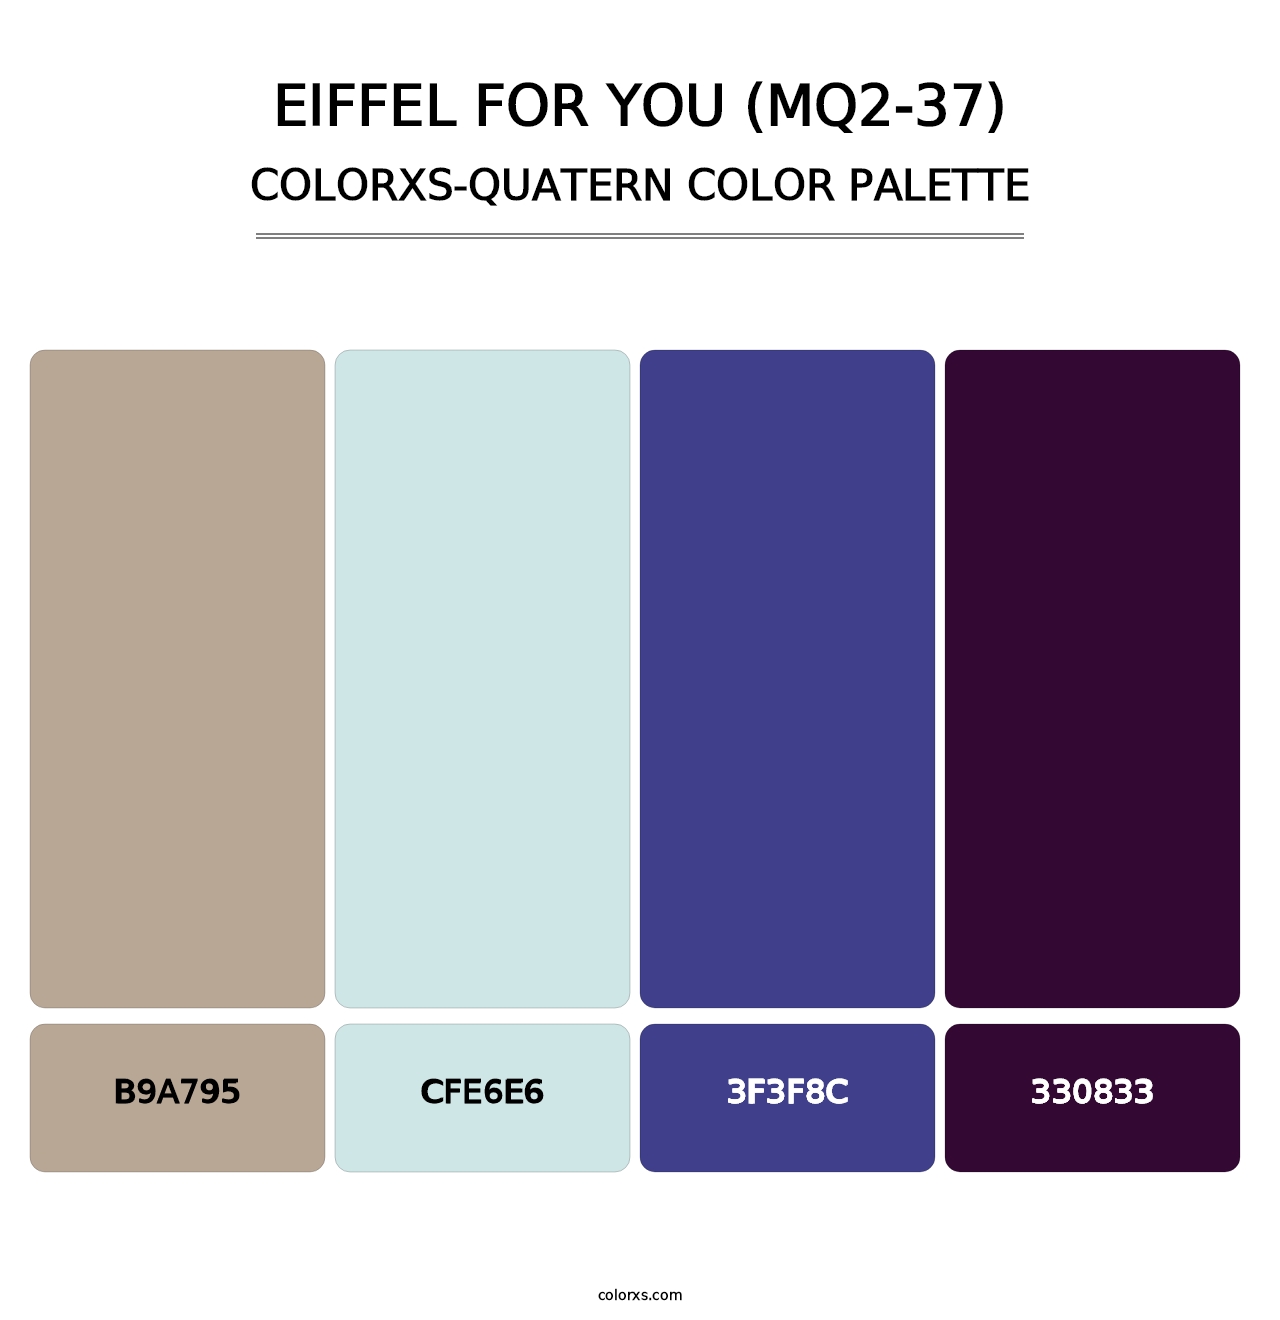 Eiffel For You (MQ2-37) - Colorxs Quatern Palette